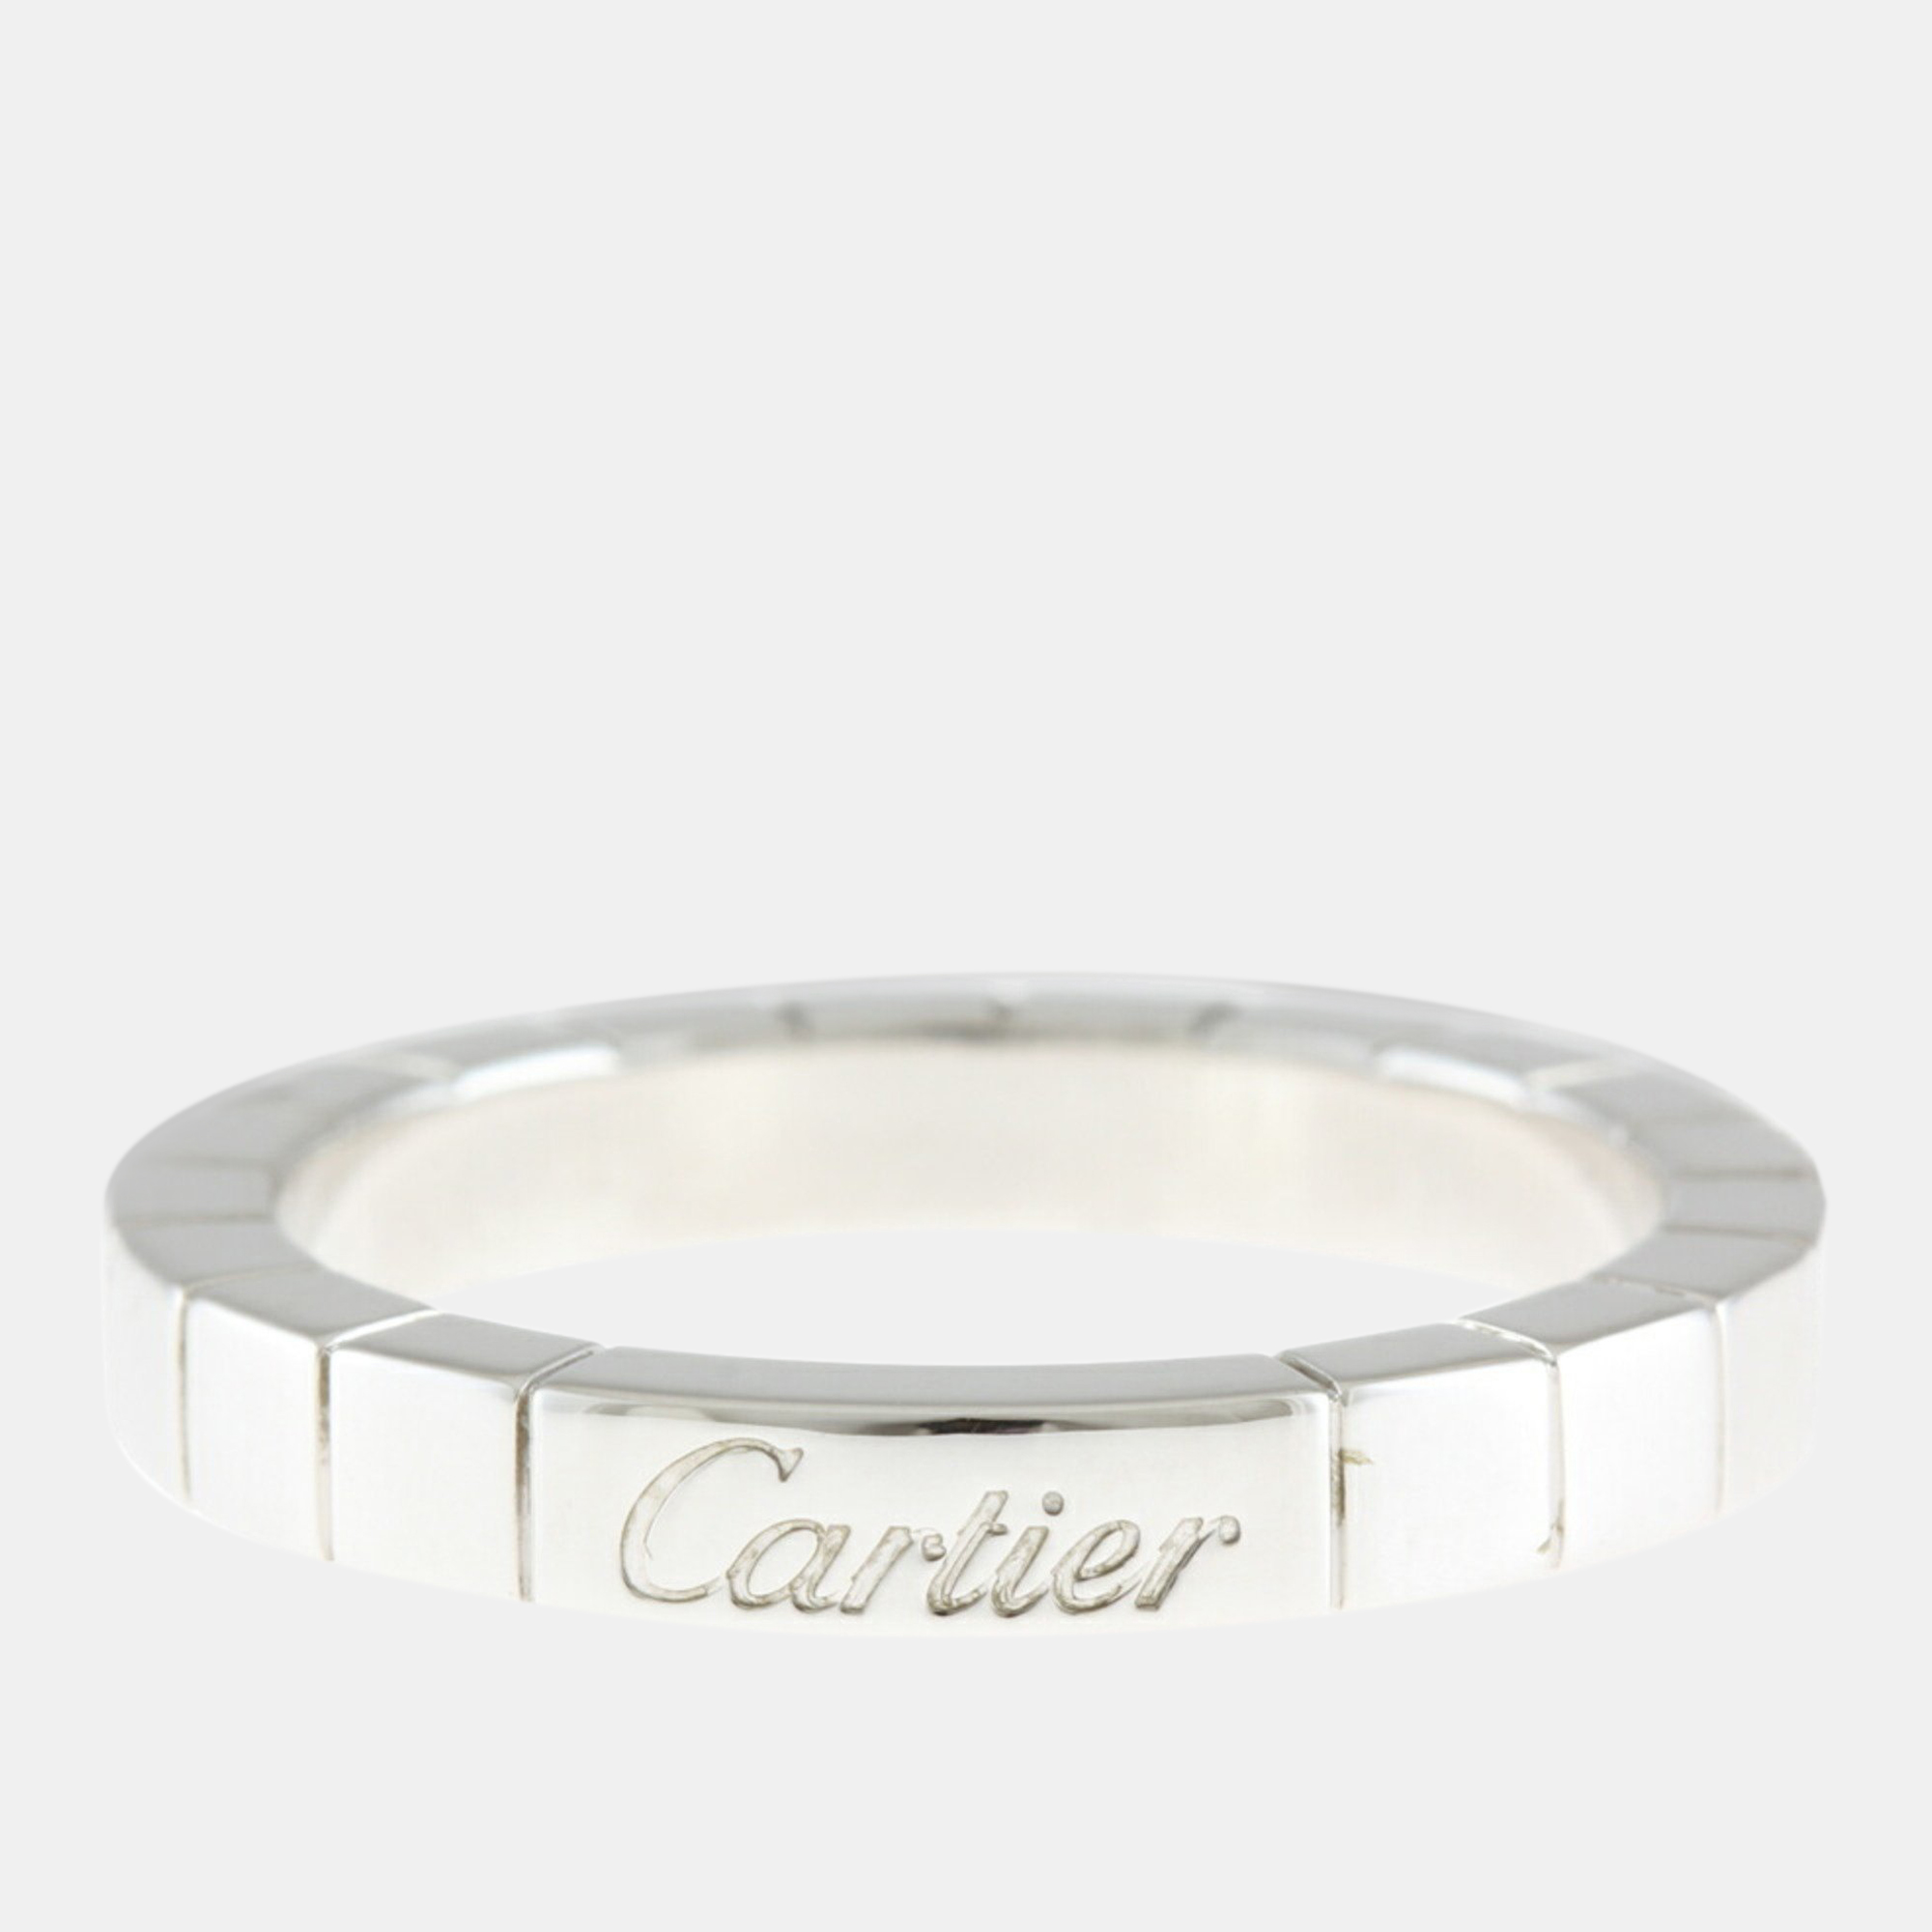 Cartier 18K White Gold Lanieres Wedding Band Ring EU 53